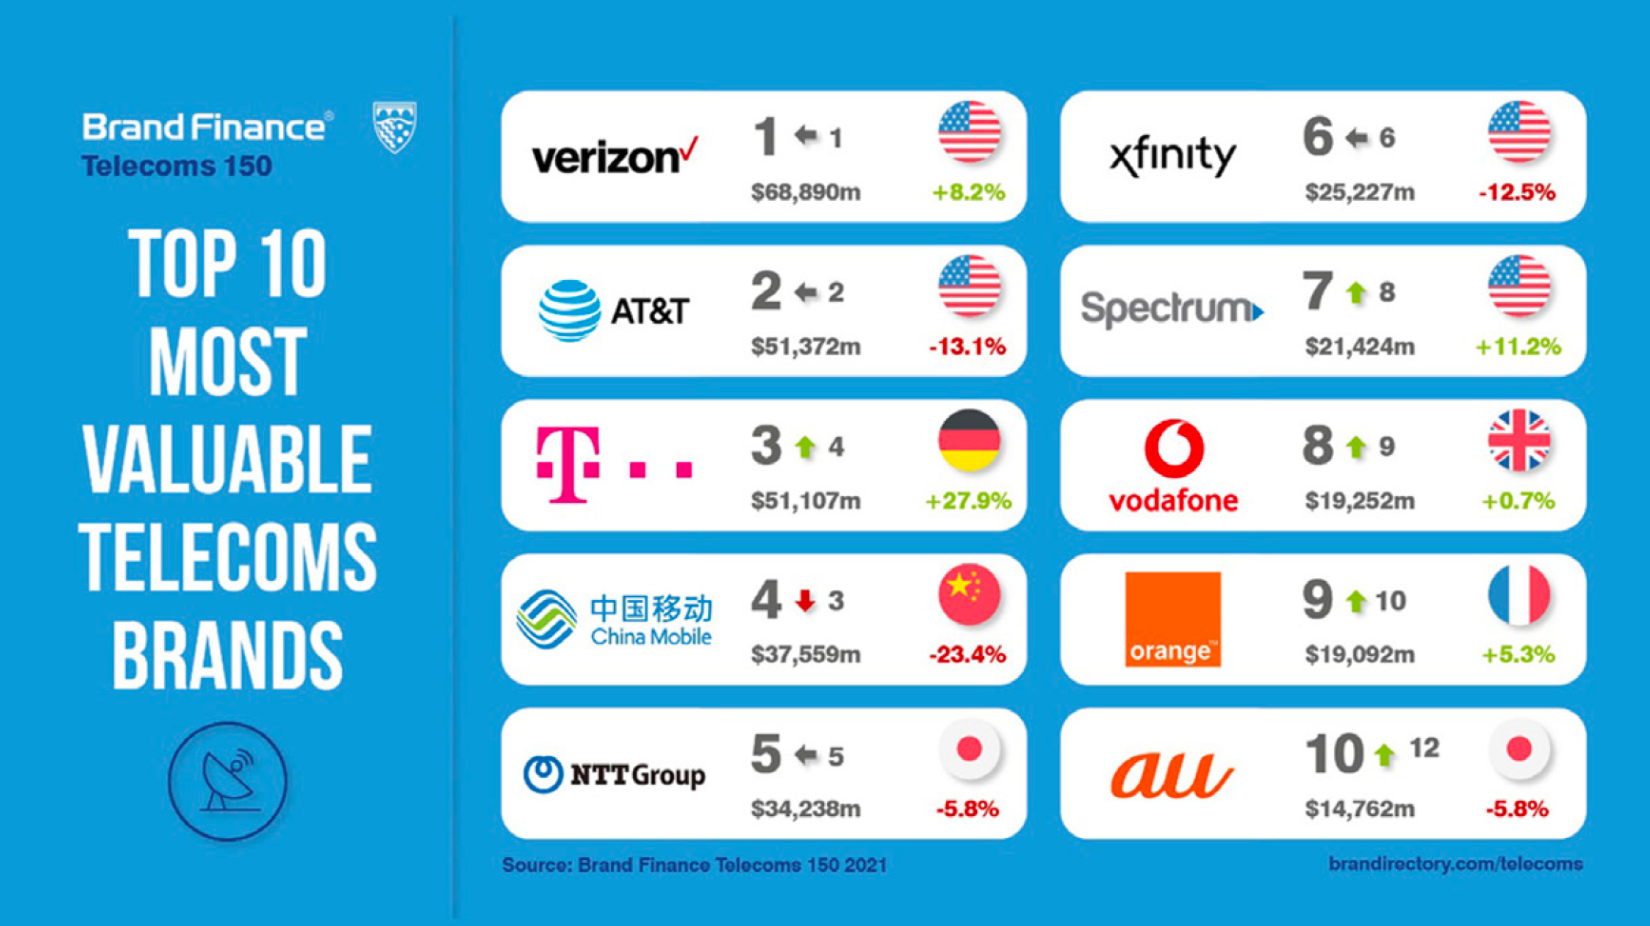 AIS TRUE Telenor เข้าวิน หลังติด 1 ใน 150 Brand Finance แบรนด์โทรคมนาคม ครองแชมป์โดย Verizon